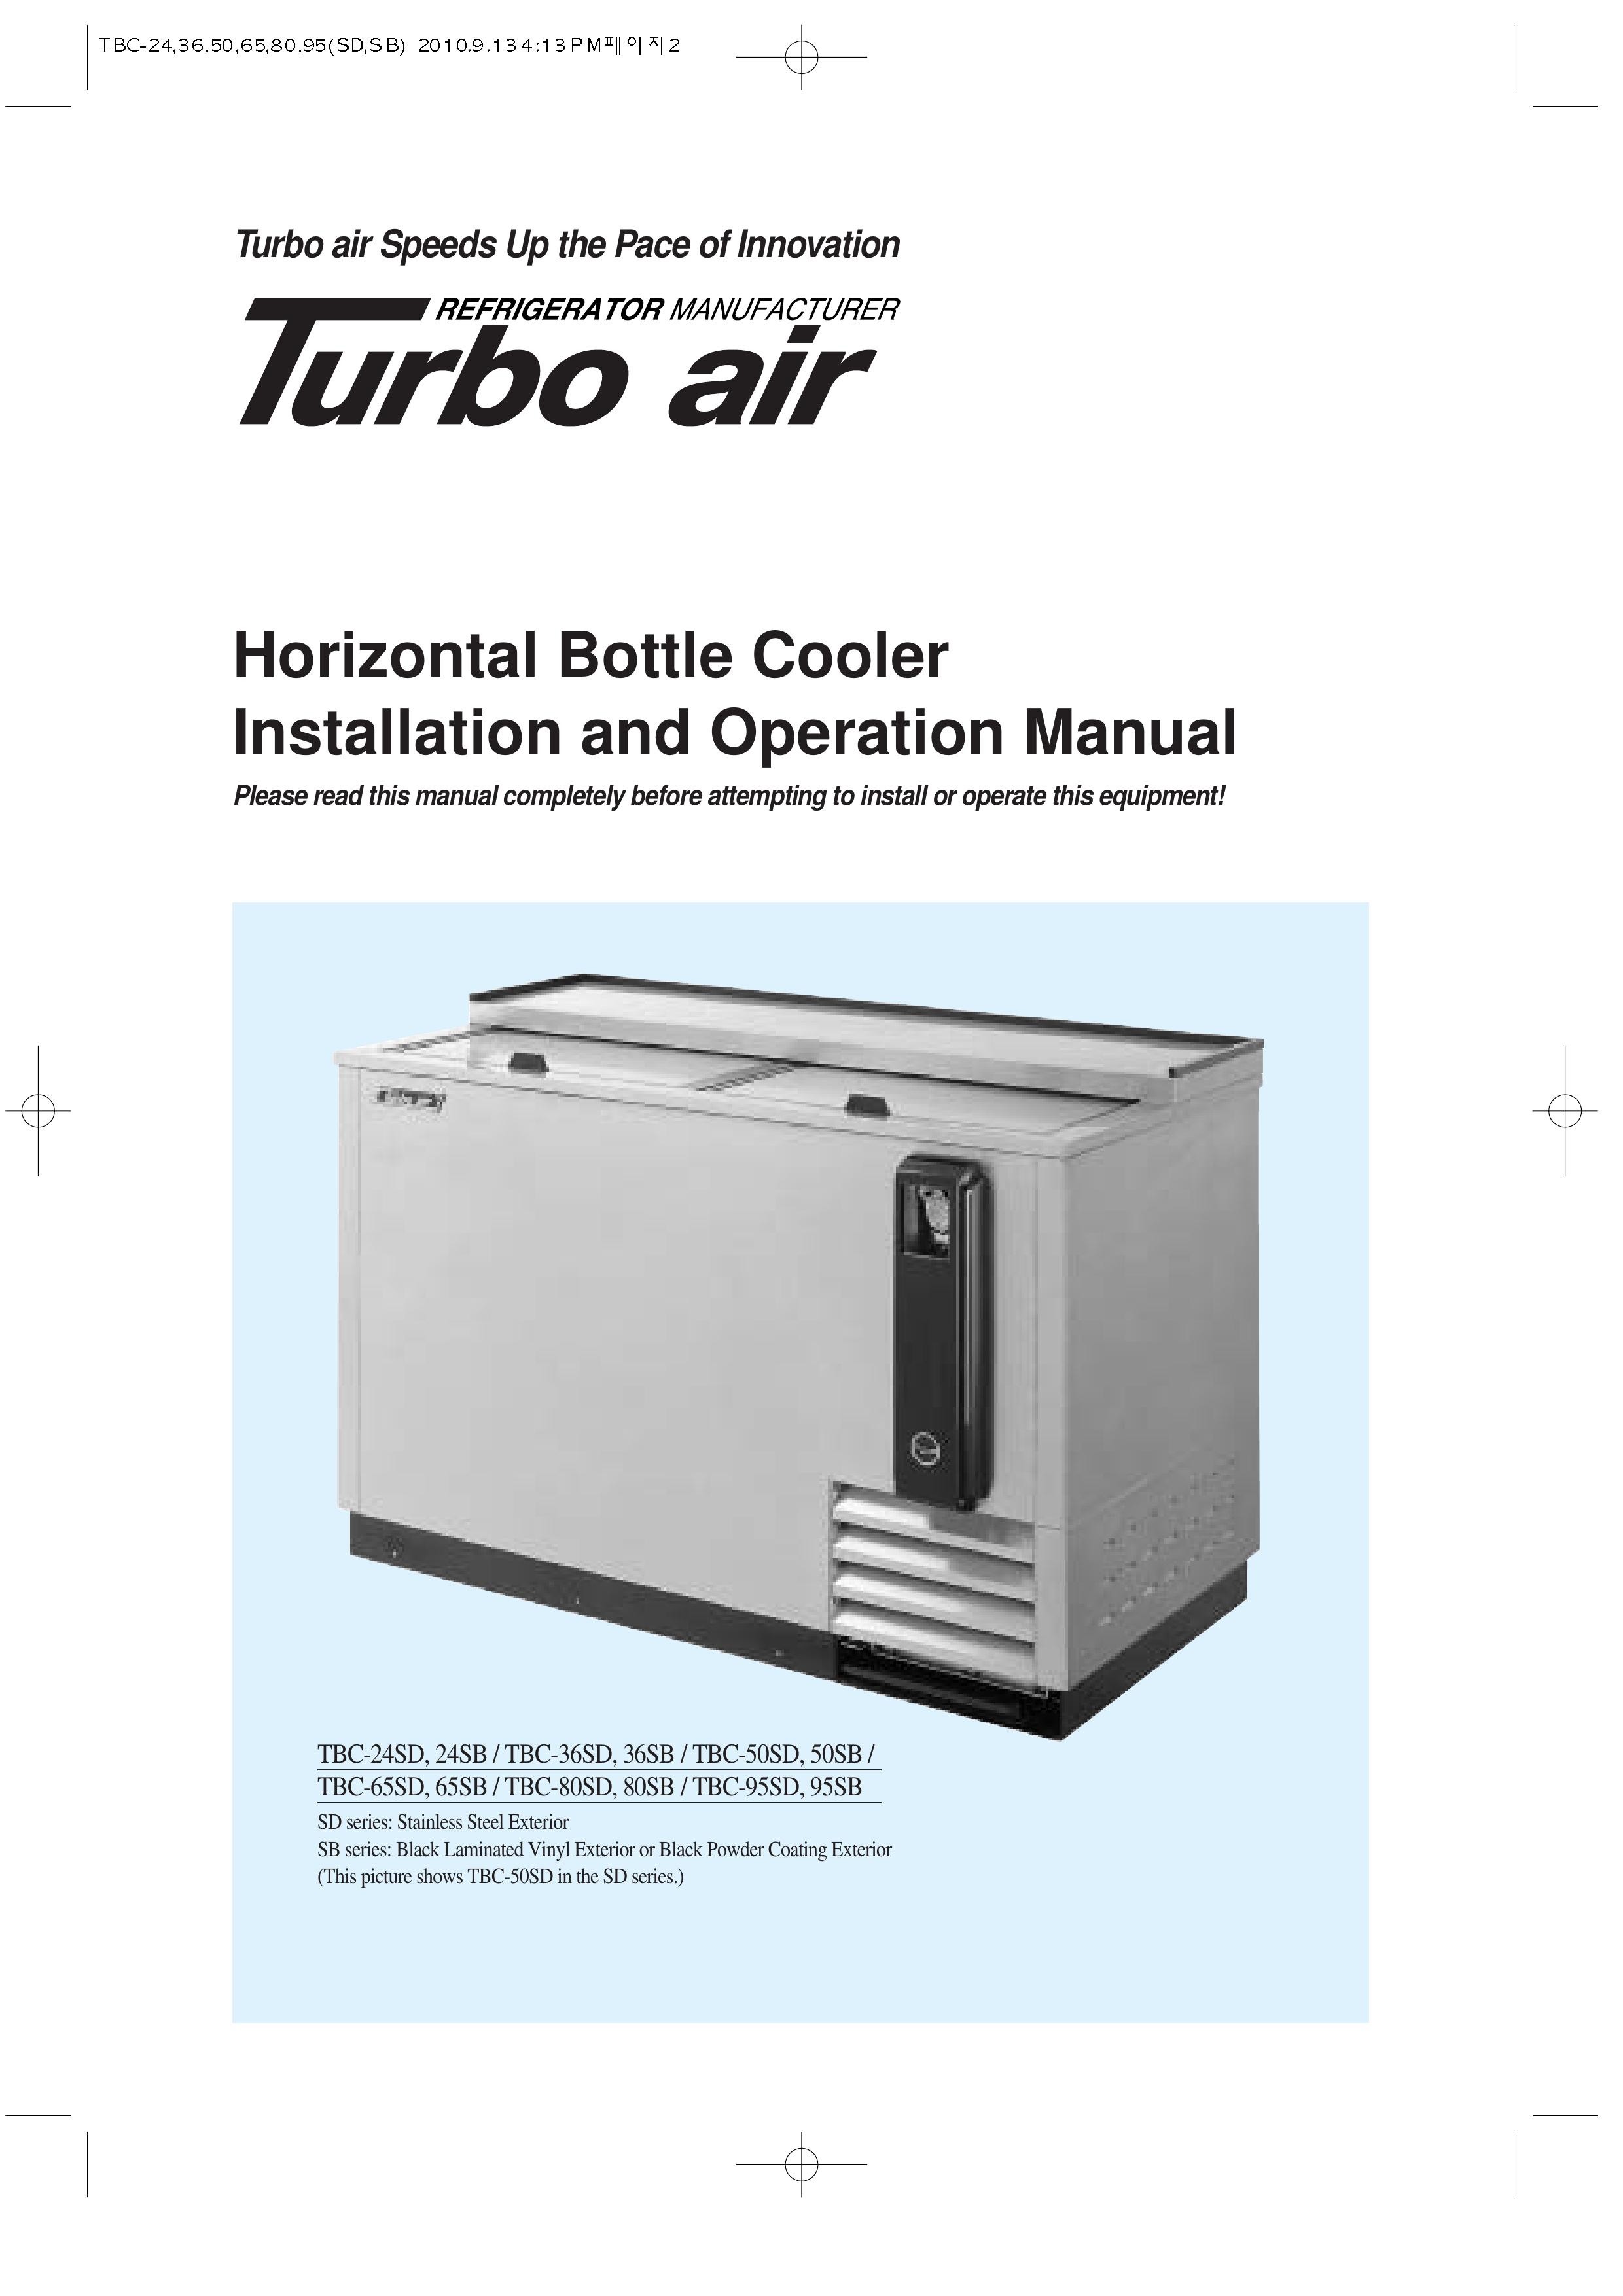 Turbo Air TBC-80SD, 80SB Refrigerator User Manual